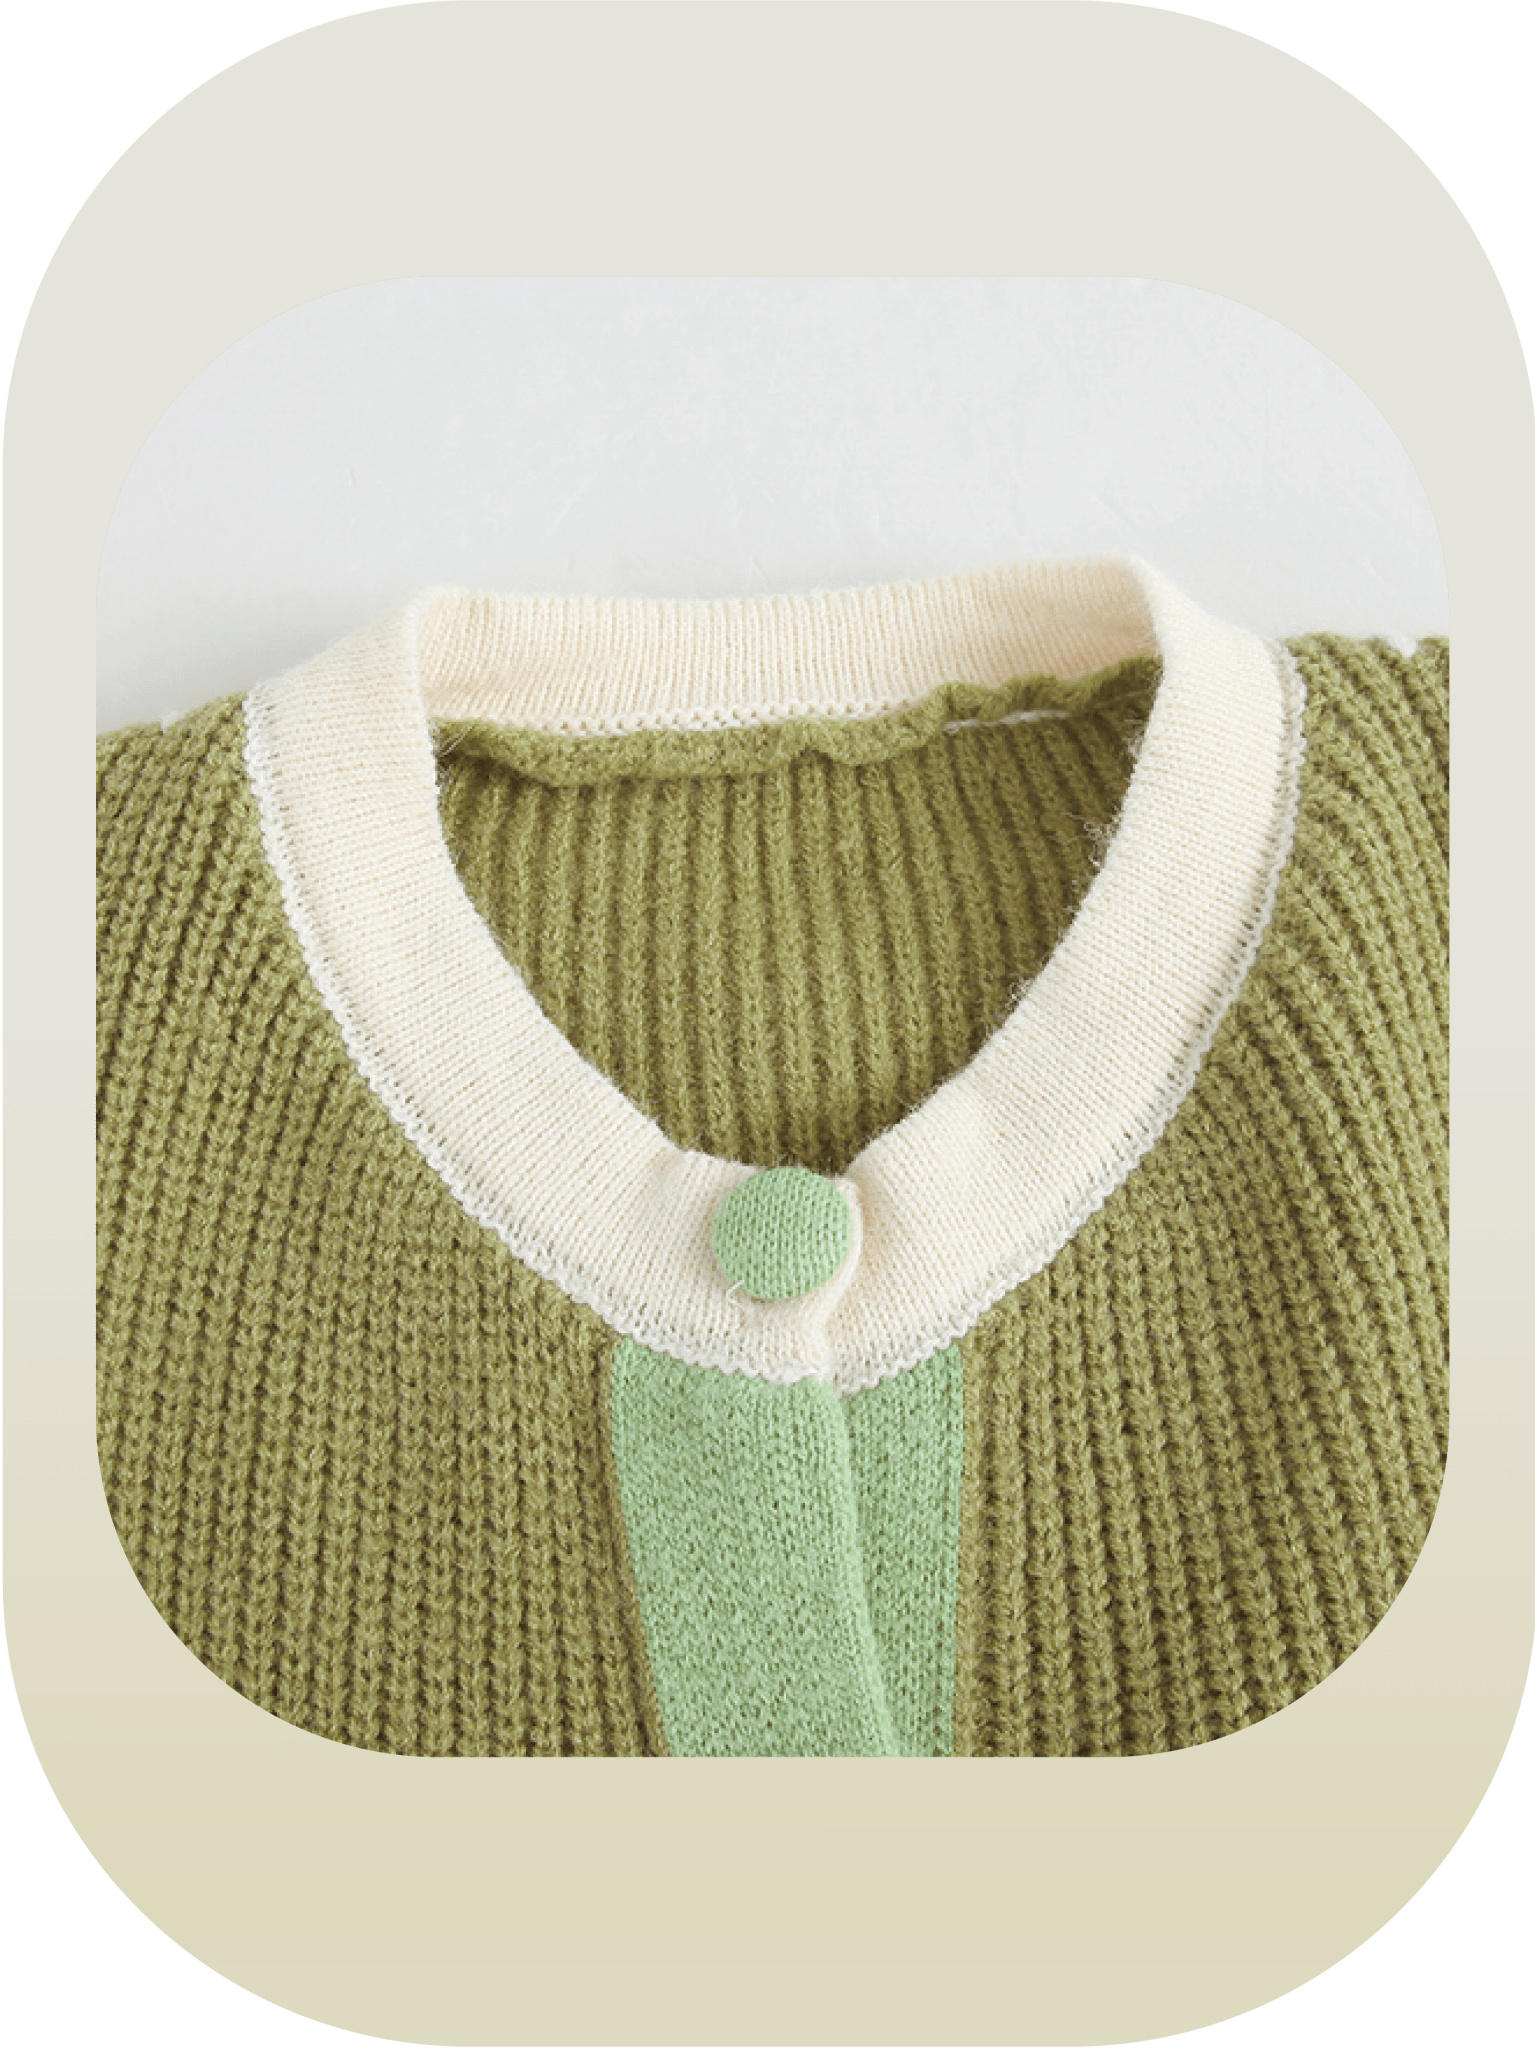 Contrast Design Knit Cardigan